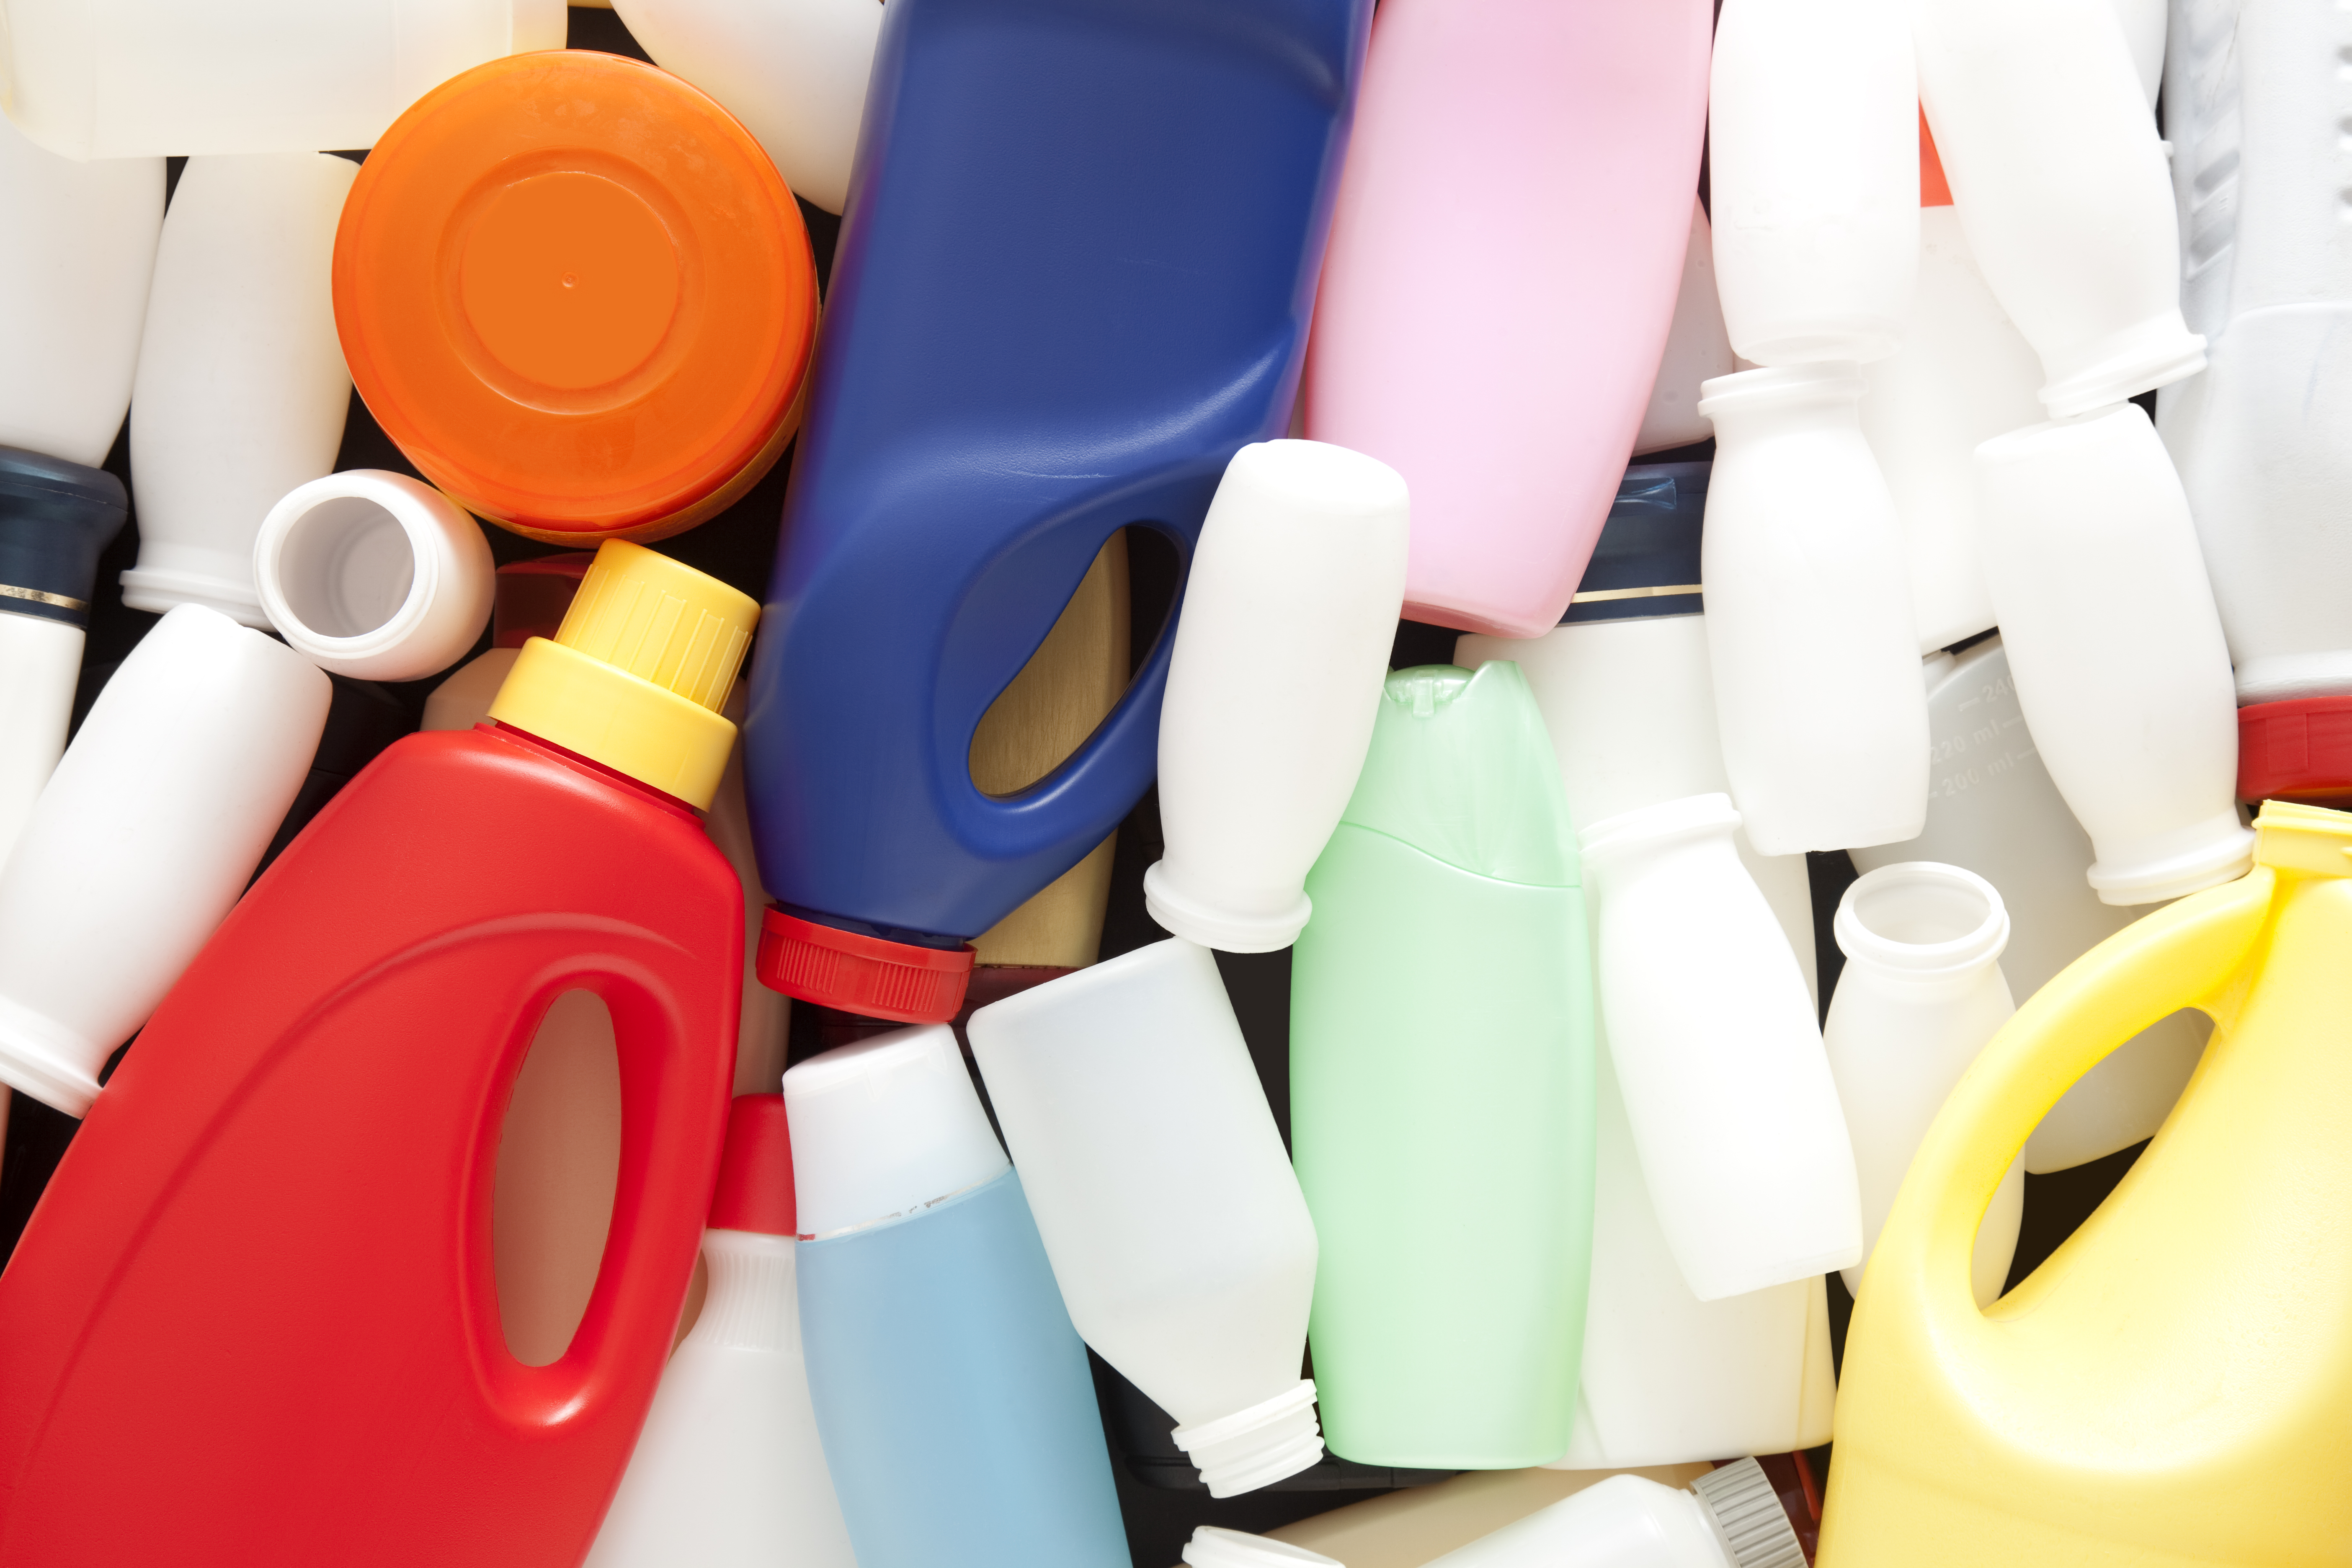 Background: Colorful plastic bottles